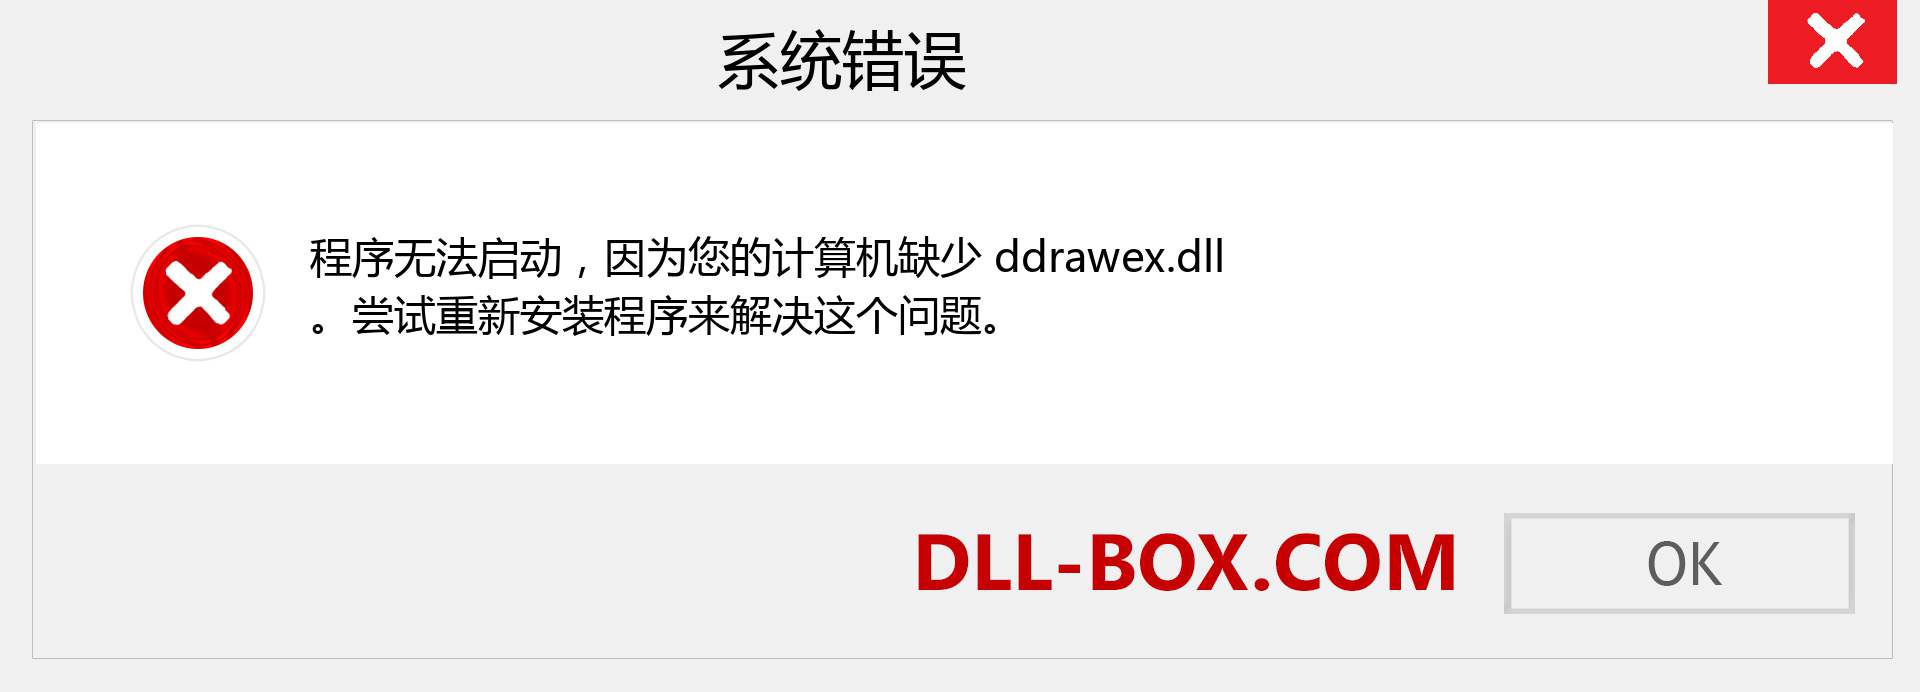 ddrawex.dll 文件丢失？。 适用于 Windows 7、8、10 的下载 - 修复 Windows、照片、图像上的 ddrawex dll 丢失错误